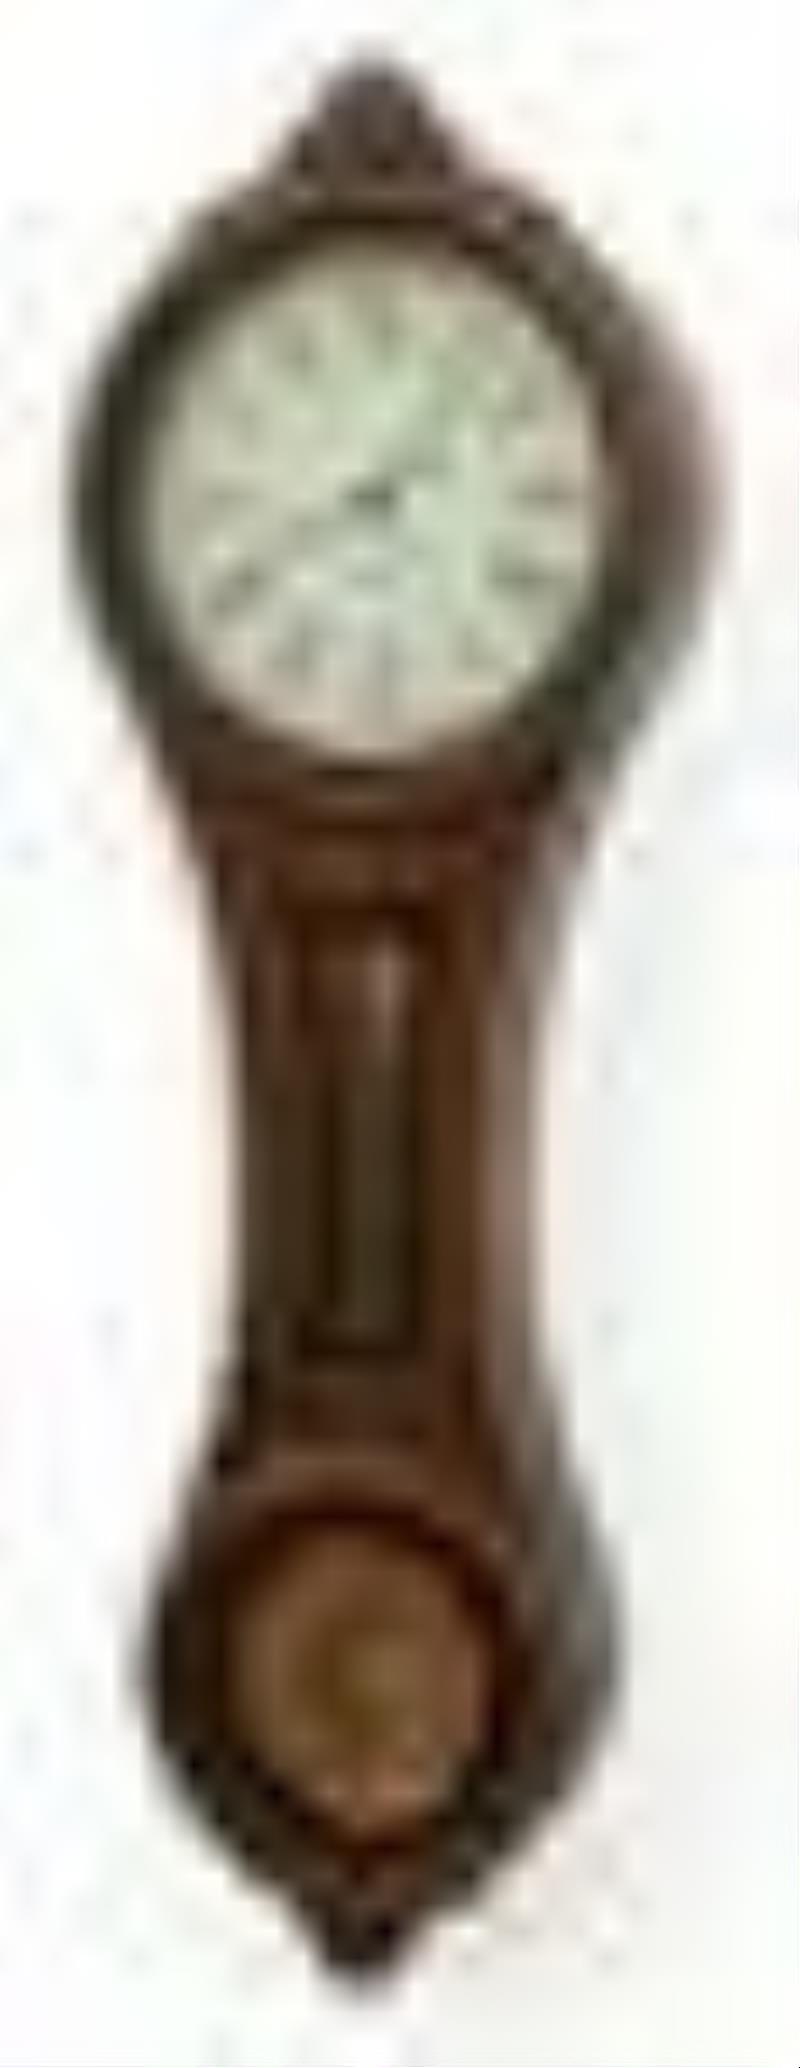 E. Howard & Co. "No. 8 Regulator" Figure Eight Wall Clock